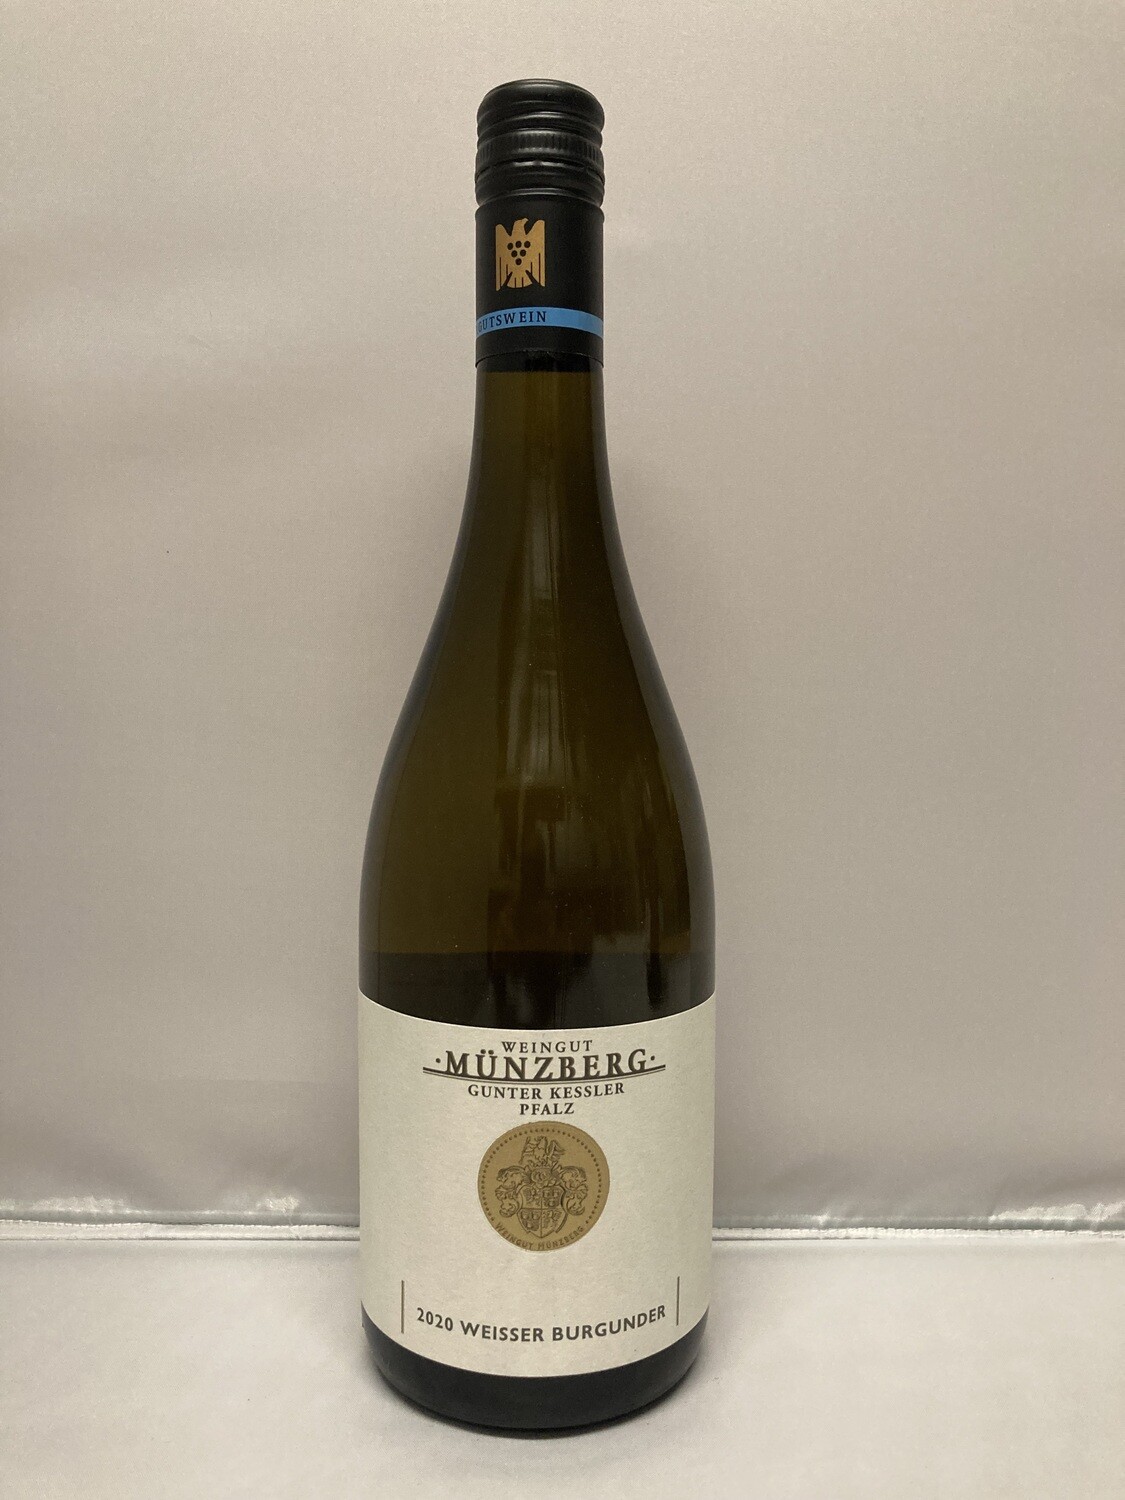 Pinot blanc-2020 droog Münzberg (Pfalz)